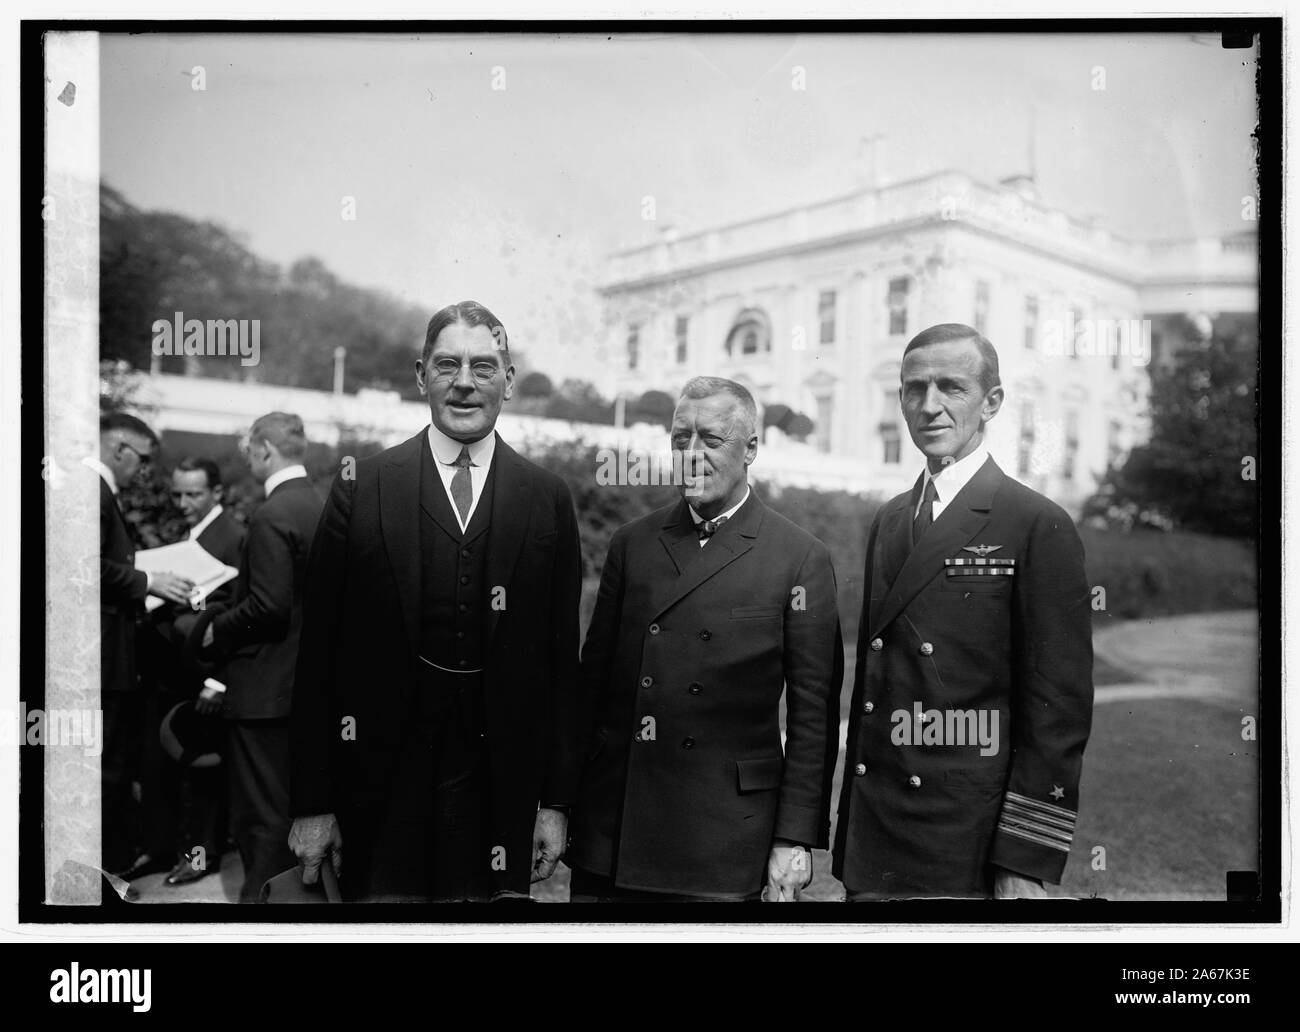 Wilburn, Dr. Hugo Eckener, Capt. Geo. W. Steele, [10/16/24] Stock Photo